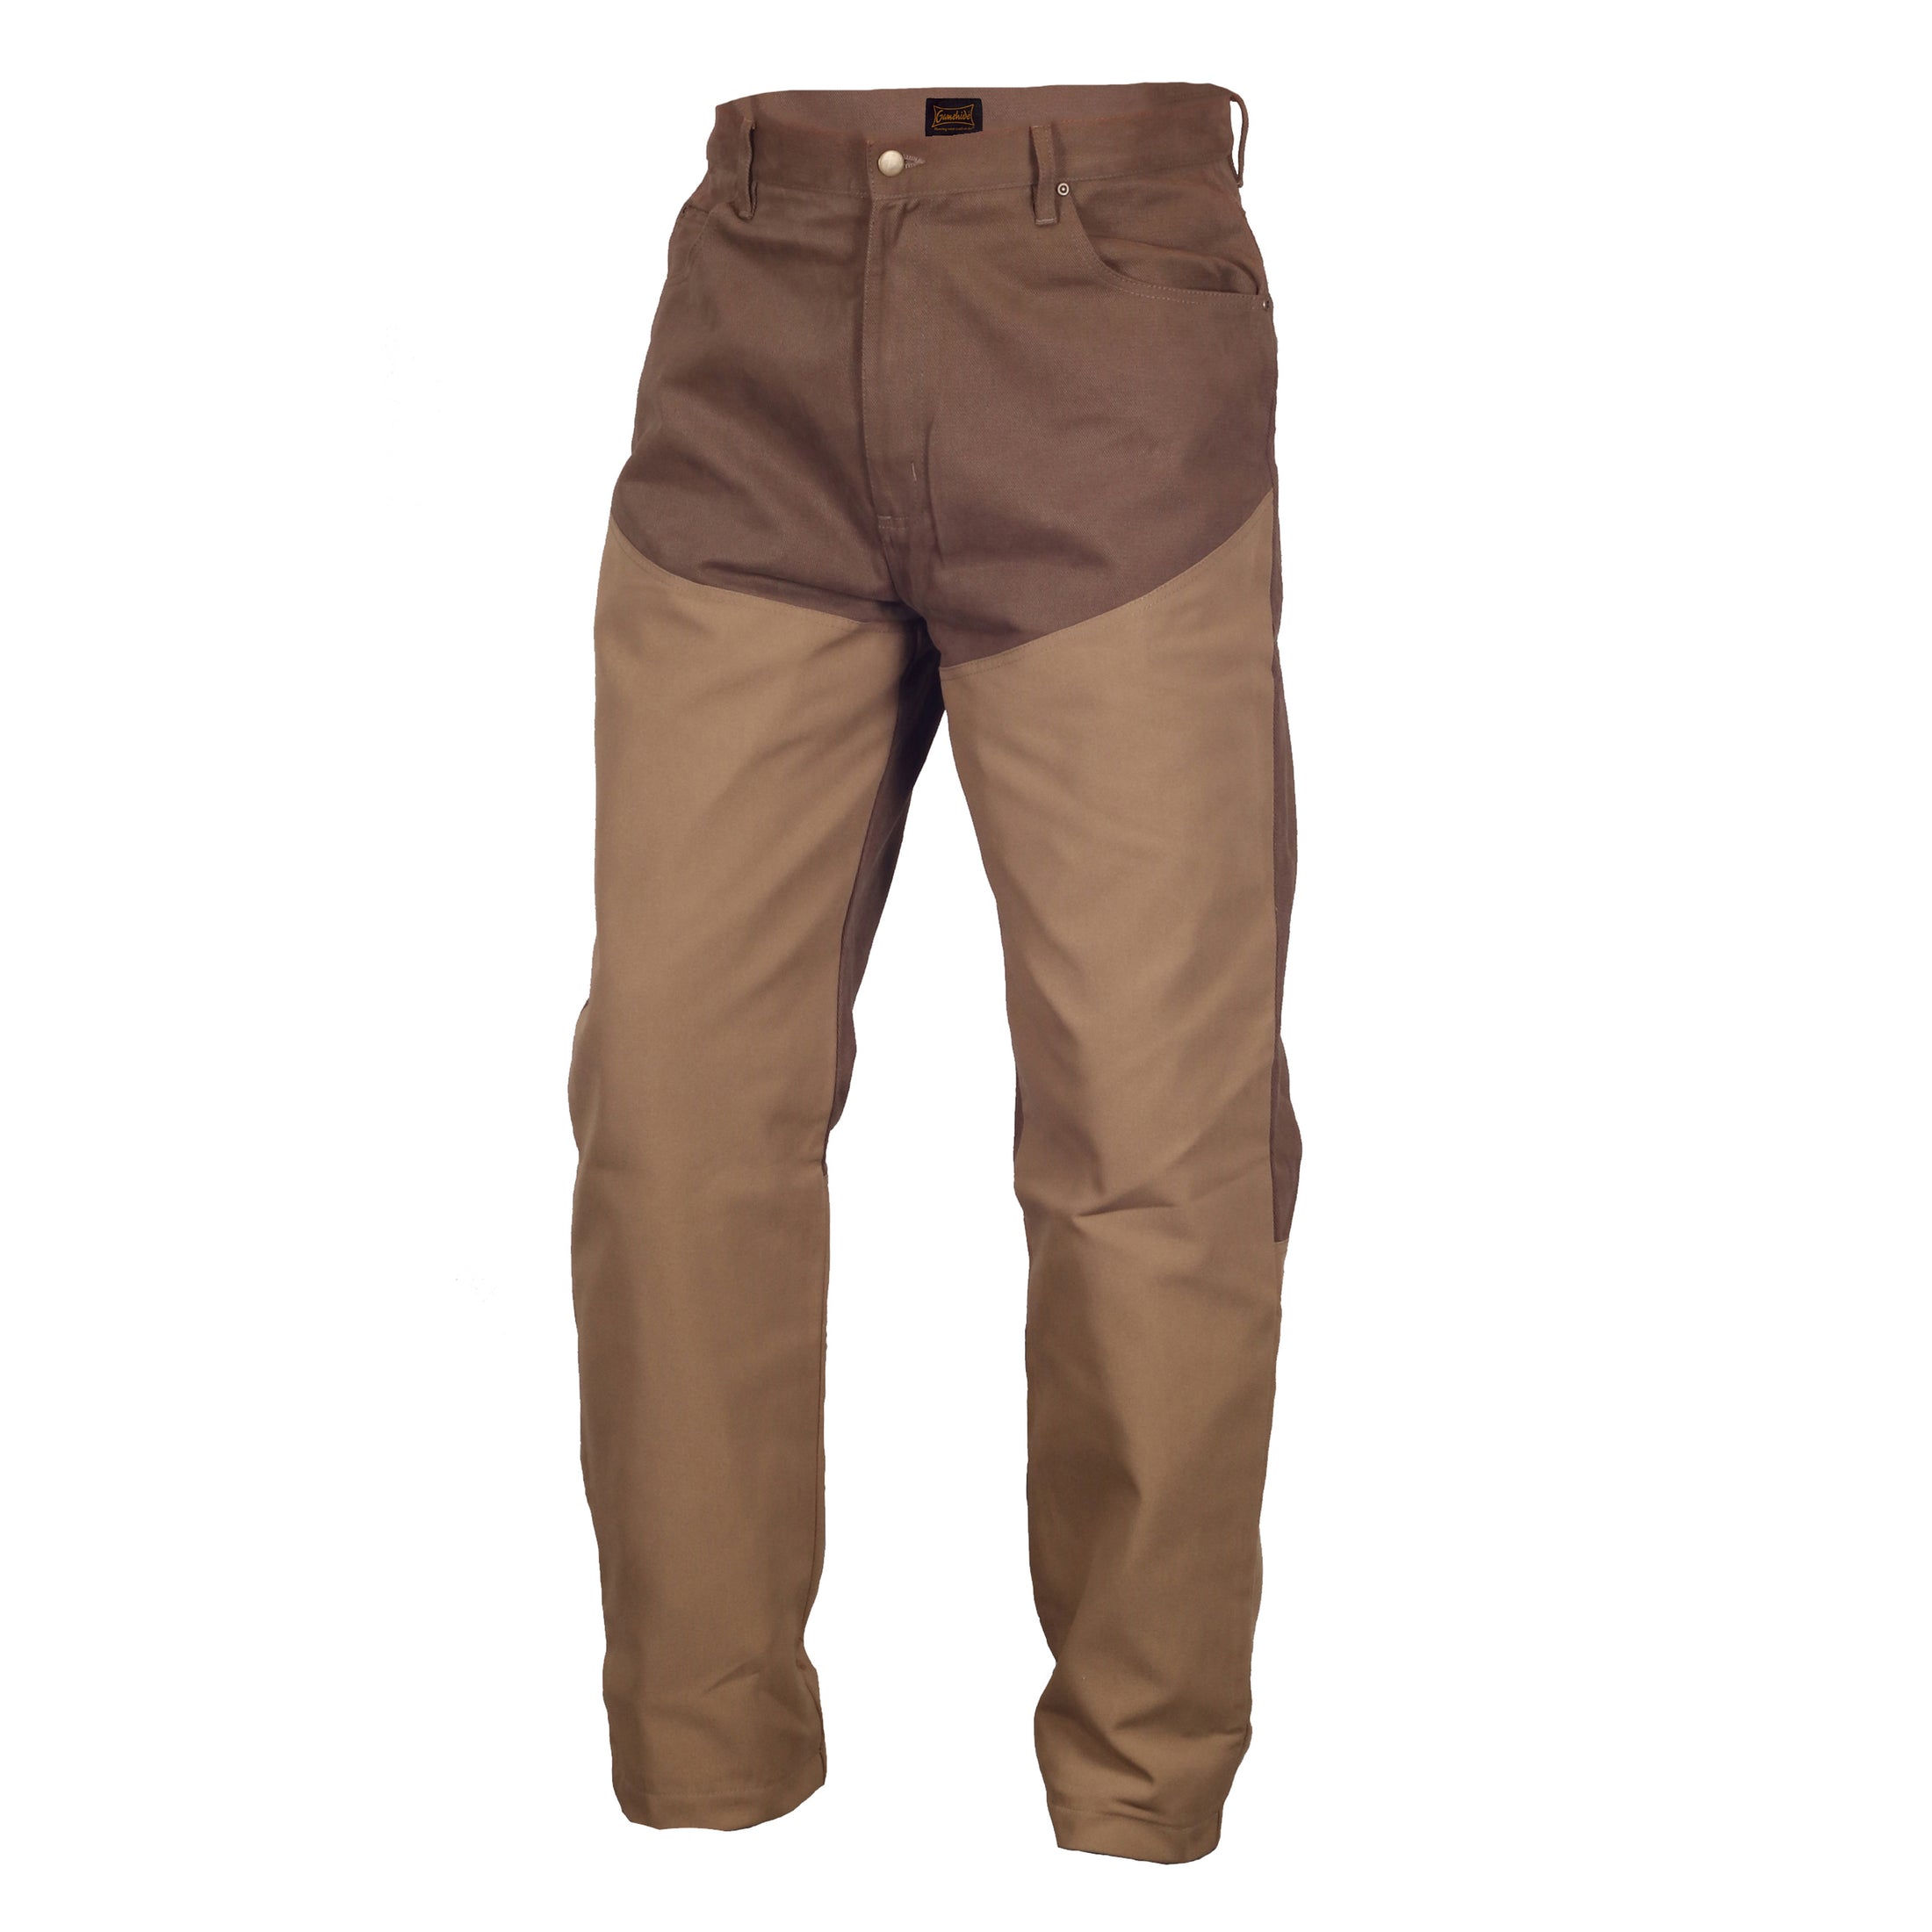 gamehide woodsman upland hunting jeans front view (dark brown)